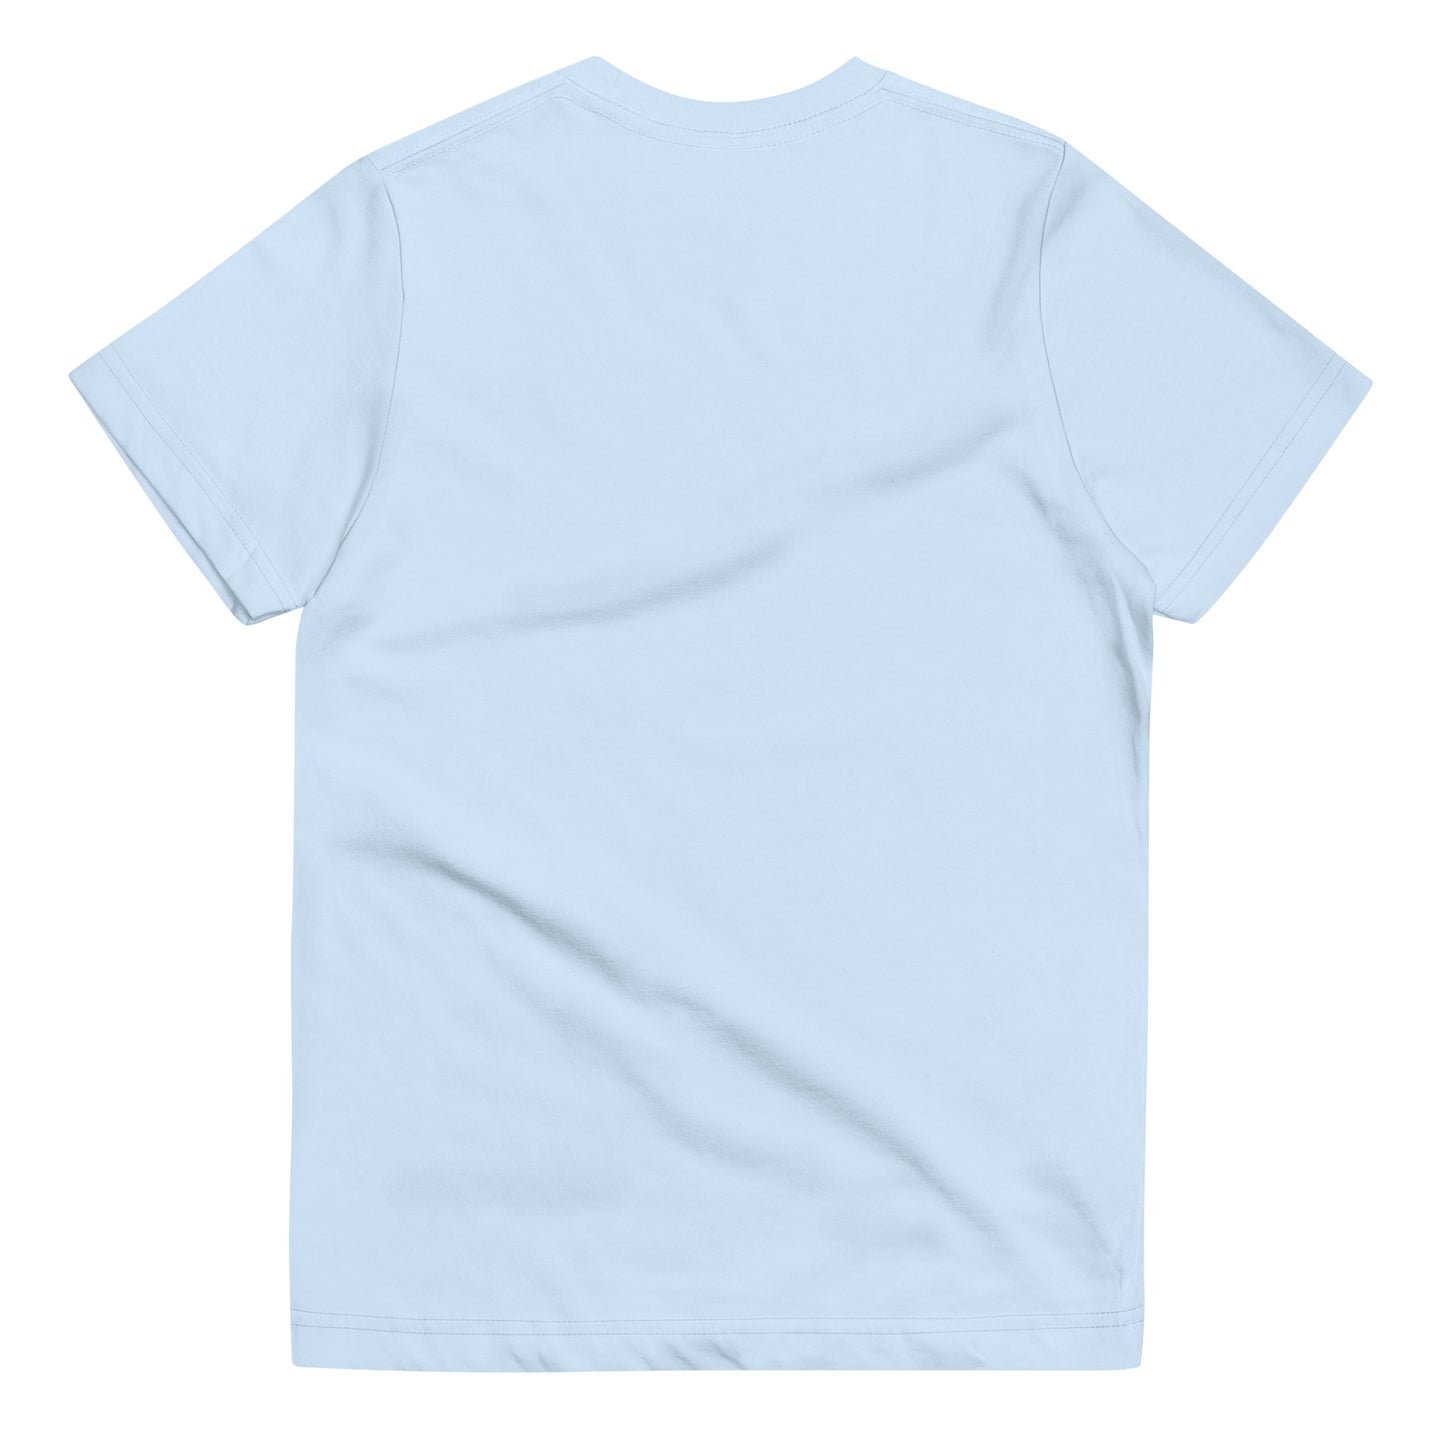  Kids T-Shirt - Light Blue - Back flat lay view - Byron Bay design on front - Genuine Byron Bay Merchandise | Produced by Go Sea Kayak Byron Bay 